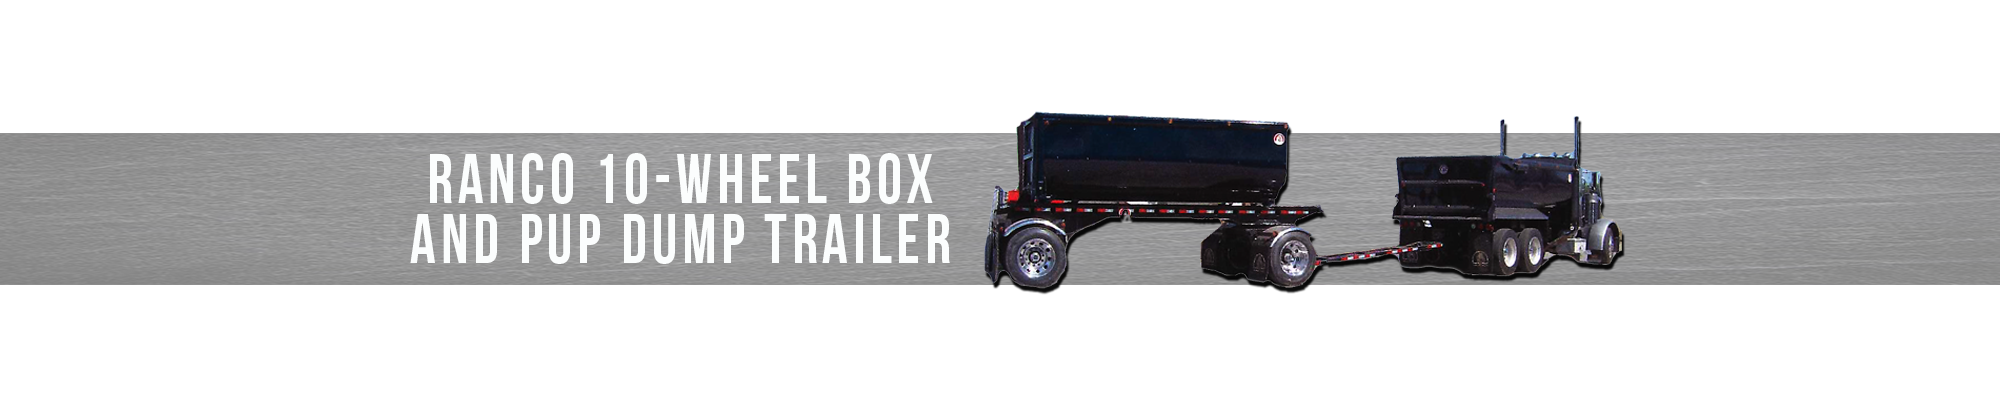 RANCO 10-Wheel Box and Pup Dump Trailer